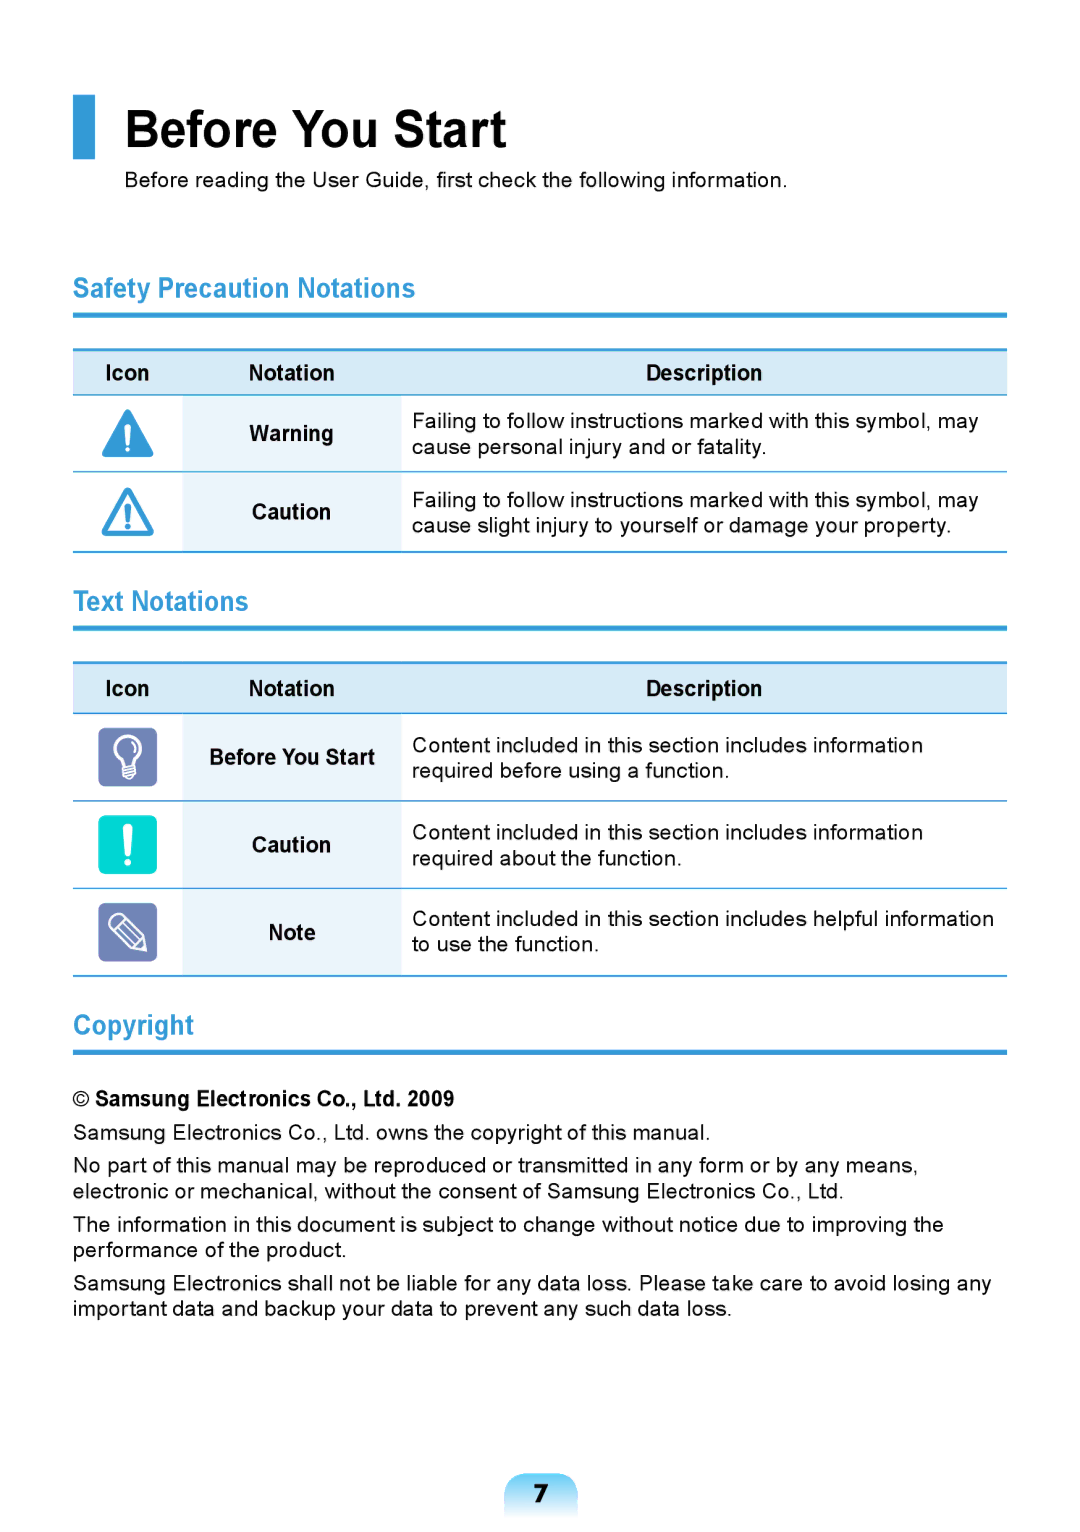 Samsung NP-R717-DA02RU Before You Start, Safety Precaution Notations, Text Notations, Copyright, Icon Notation Description 